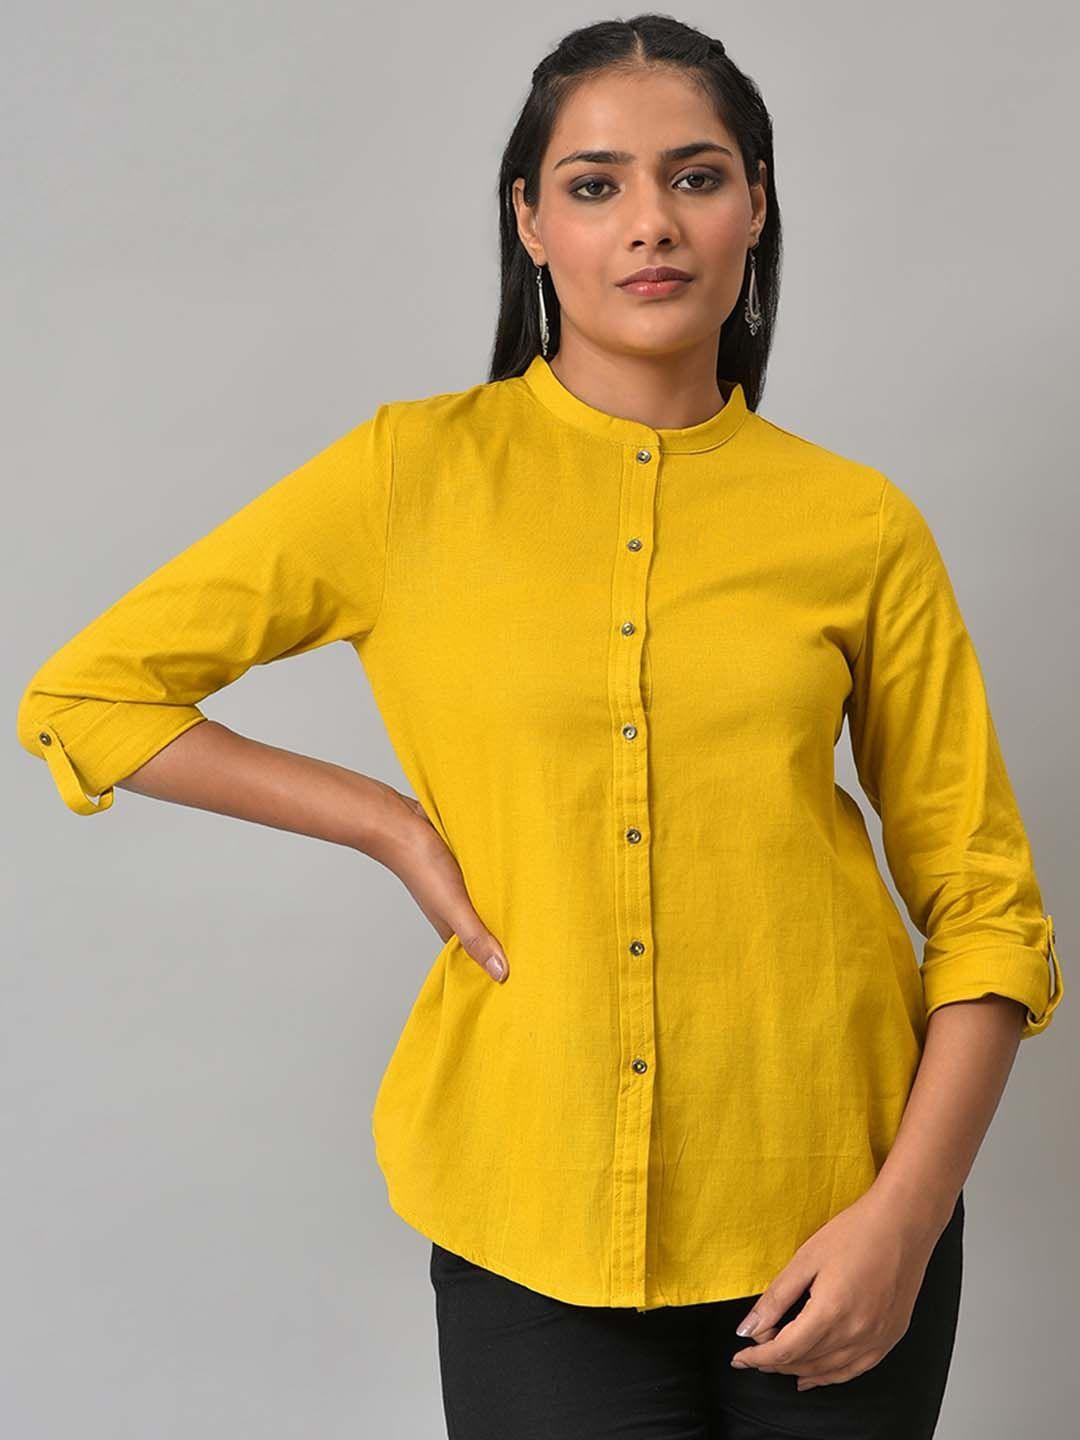 w mustard mandarin collar roll-up sleeves shirt style cotton top